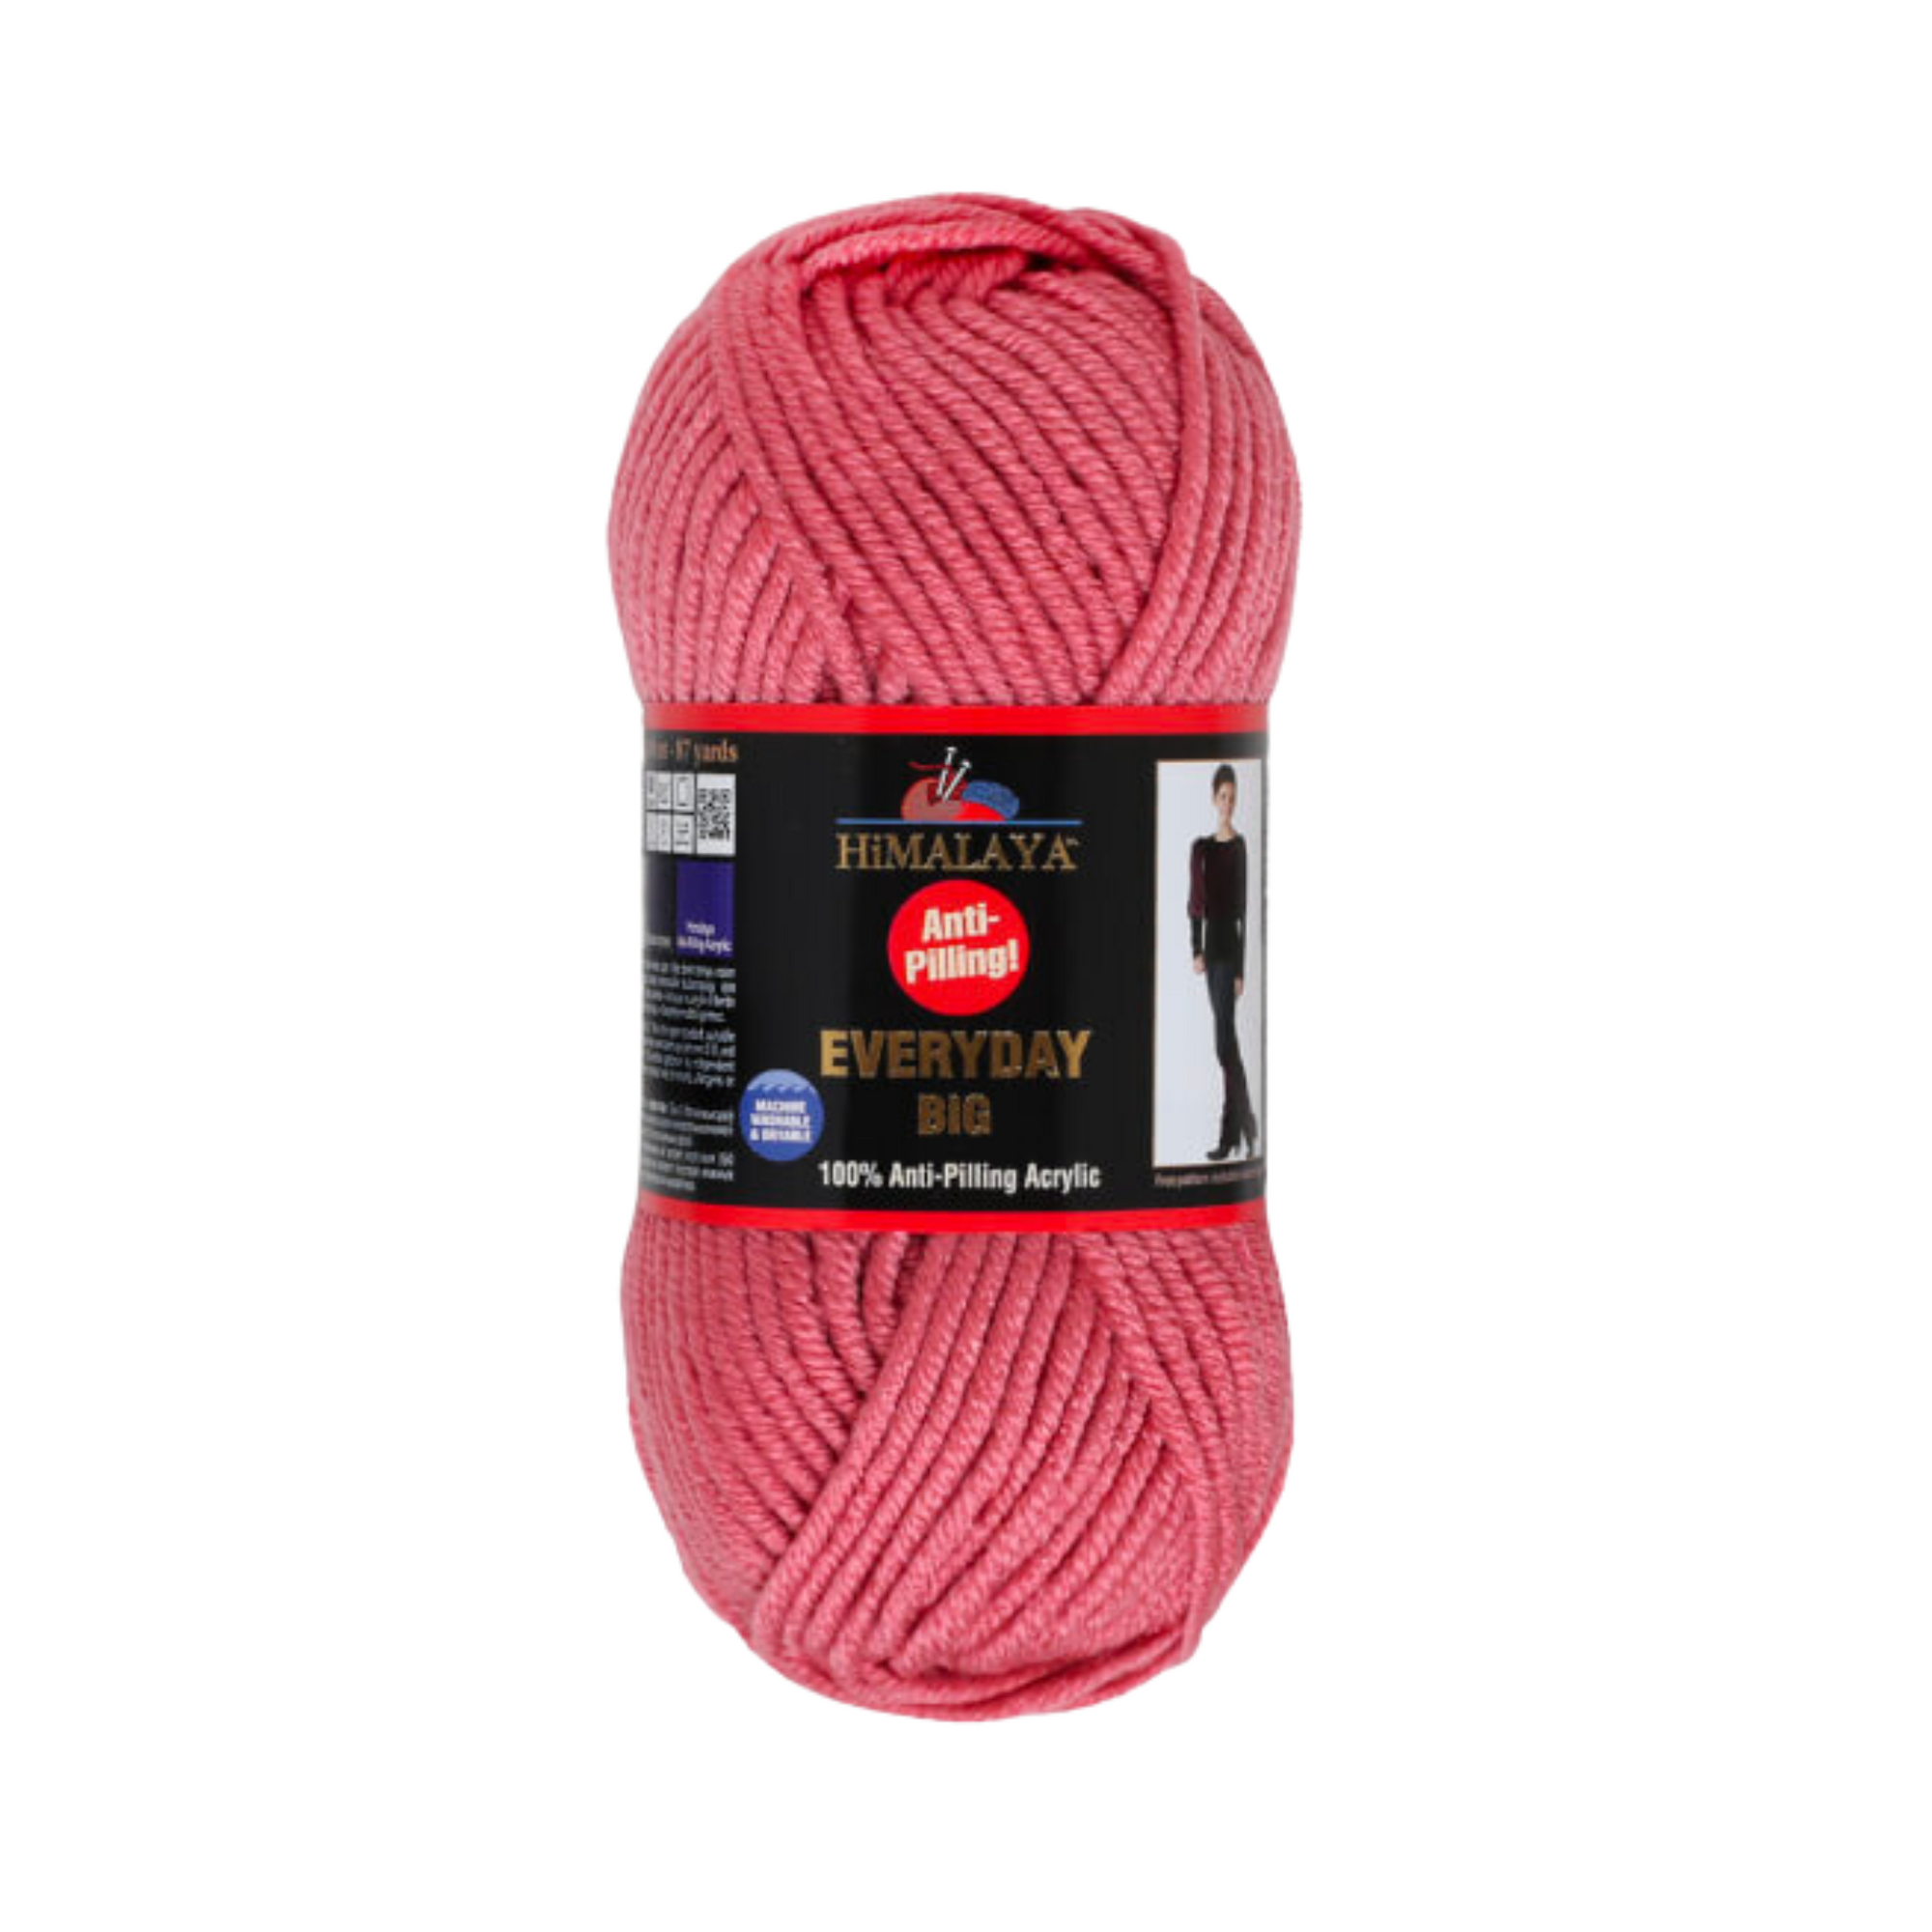 Himalaya Everyday 100% Anti-Pilling Acrylic Yarn, Dusty Rose - 70828